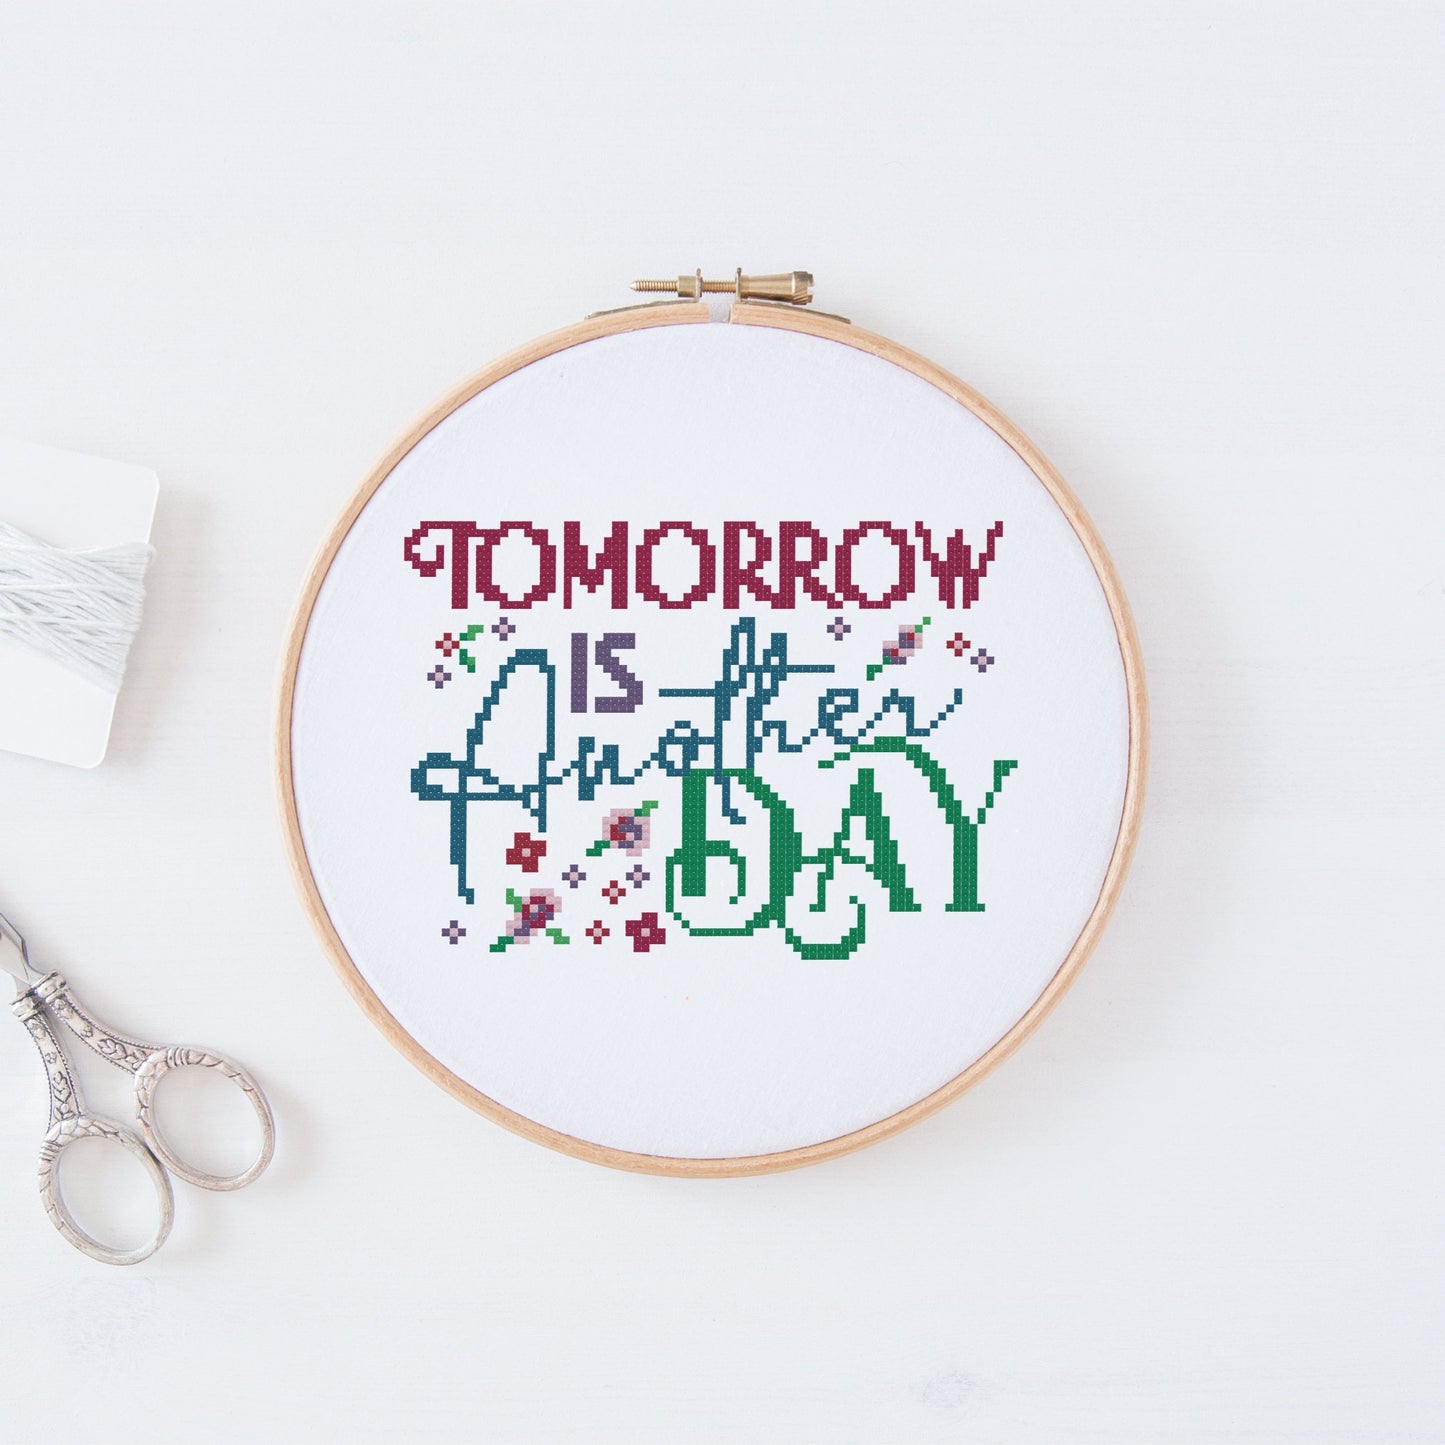 Tomorrow Is Another Day Cross Stitch Kit - F&B Crafts - F&B Crafts